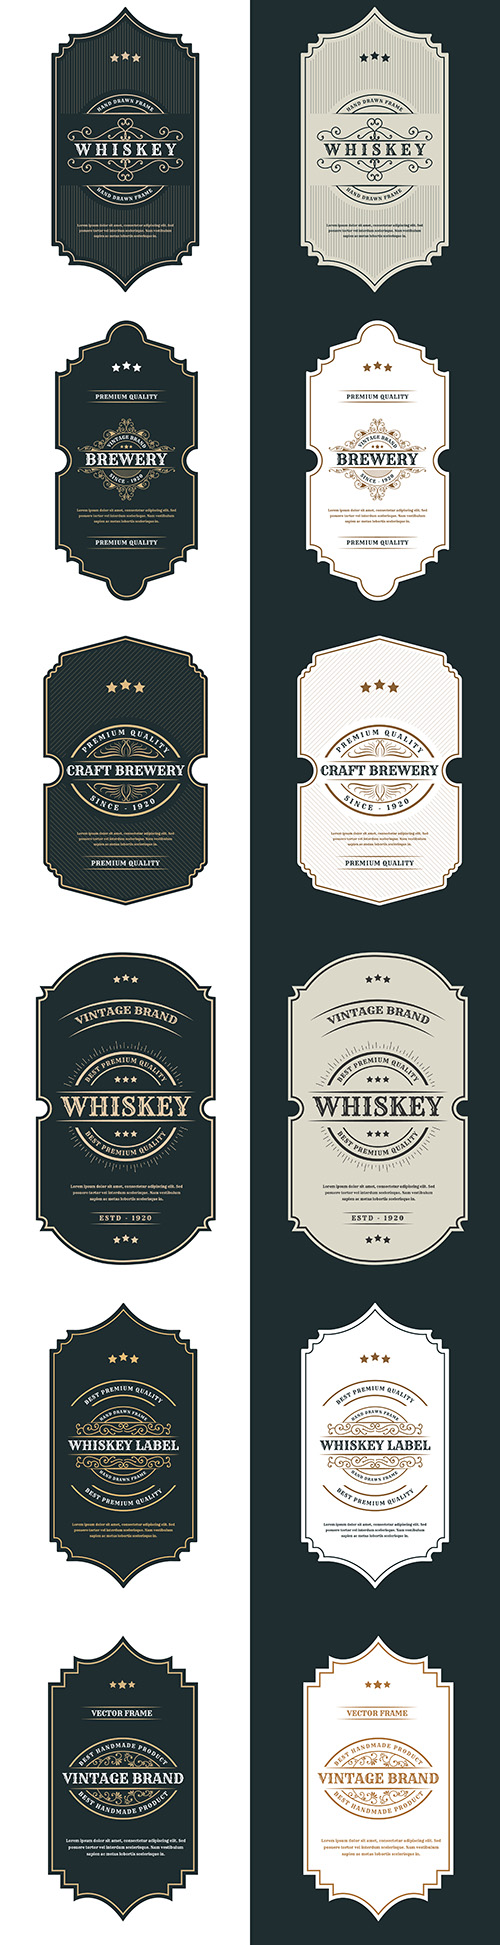 Whiskey vintage brand design label for alcohol
